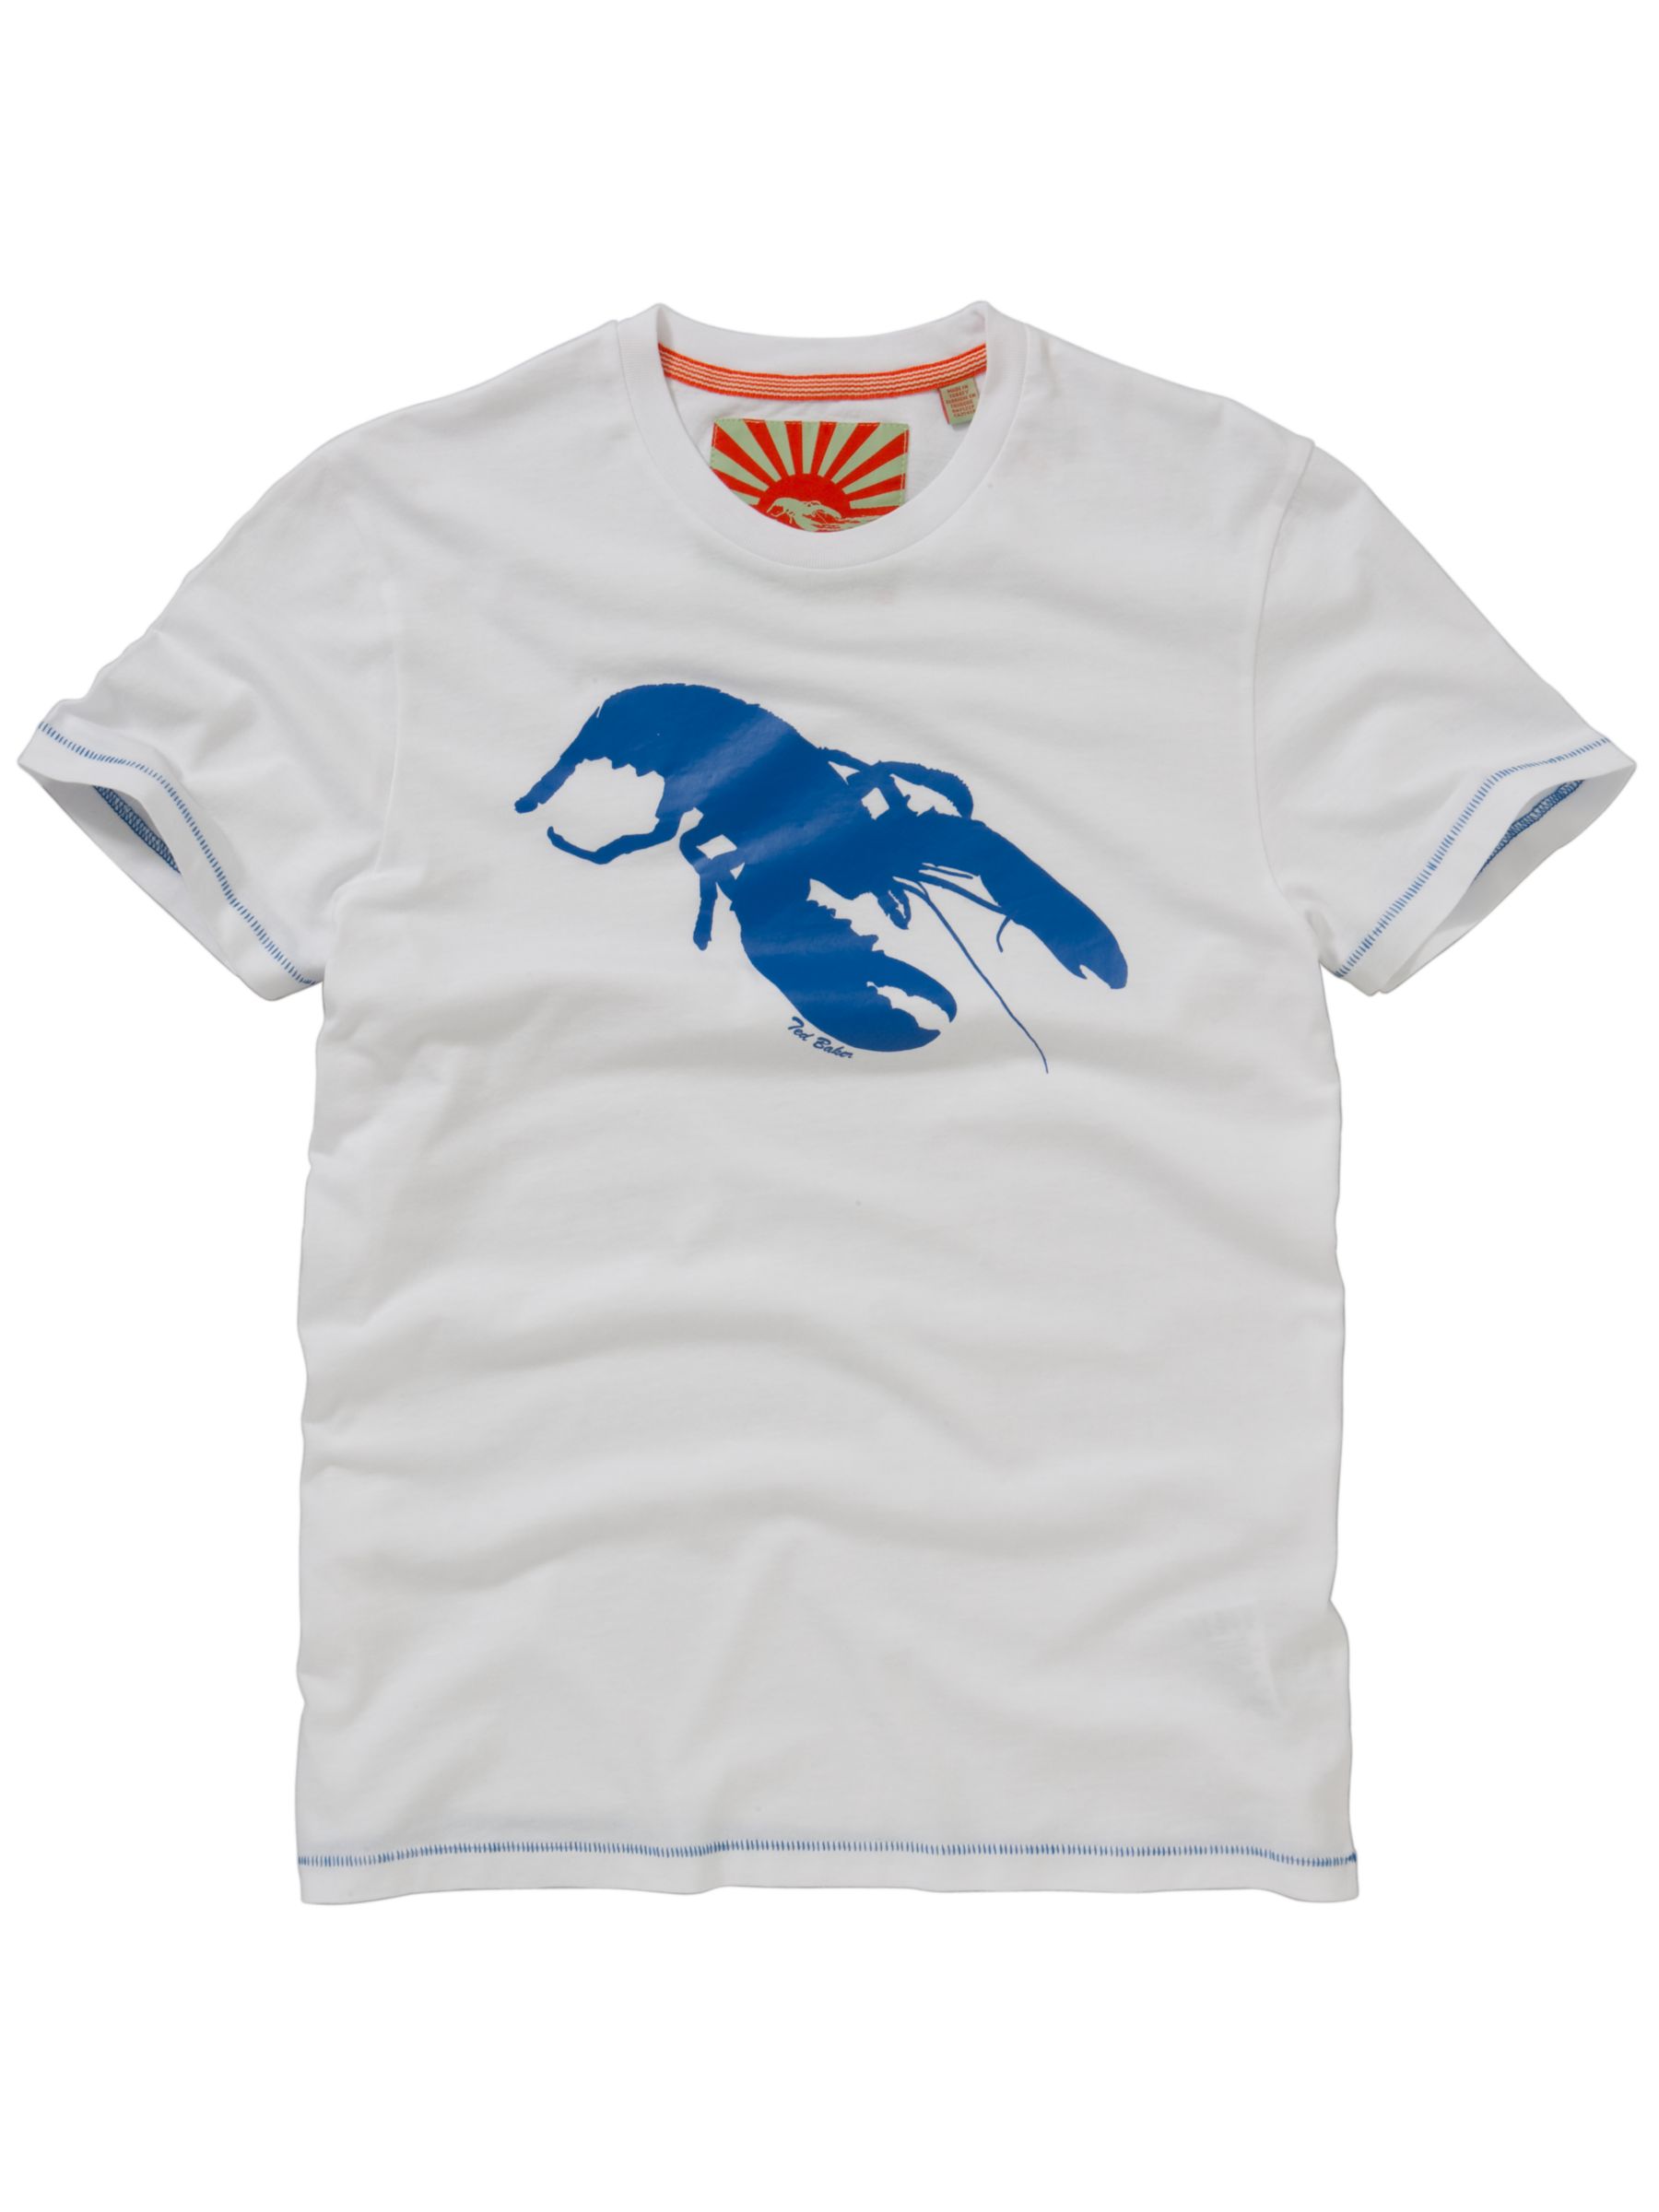 Lobster Print T-Shirt, White